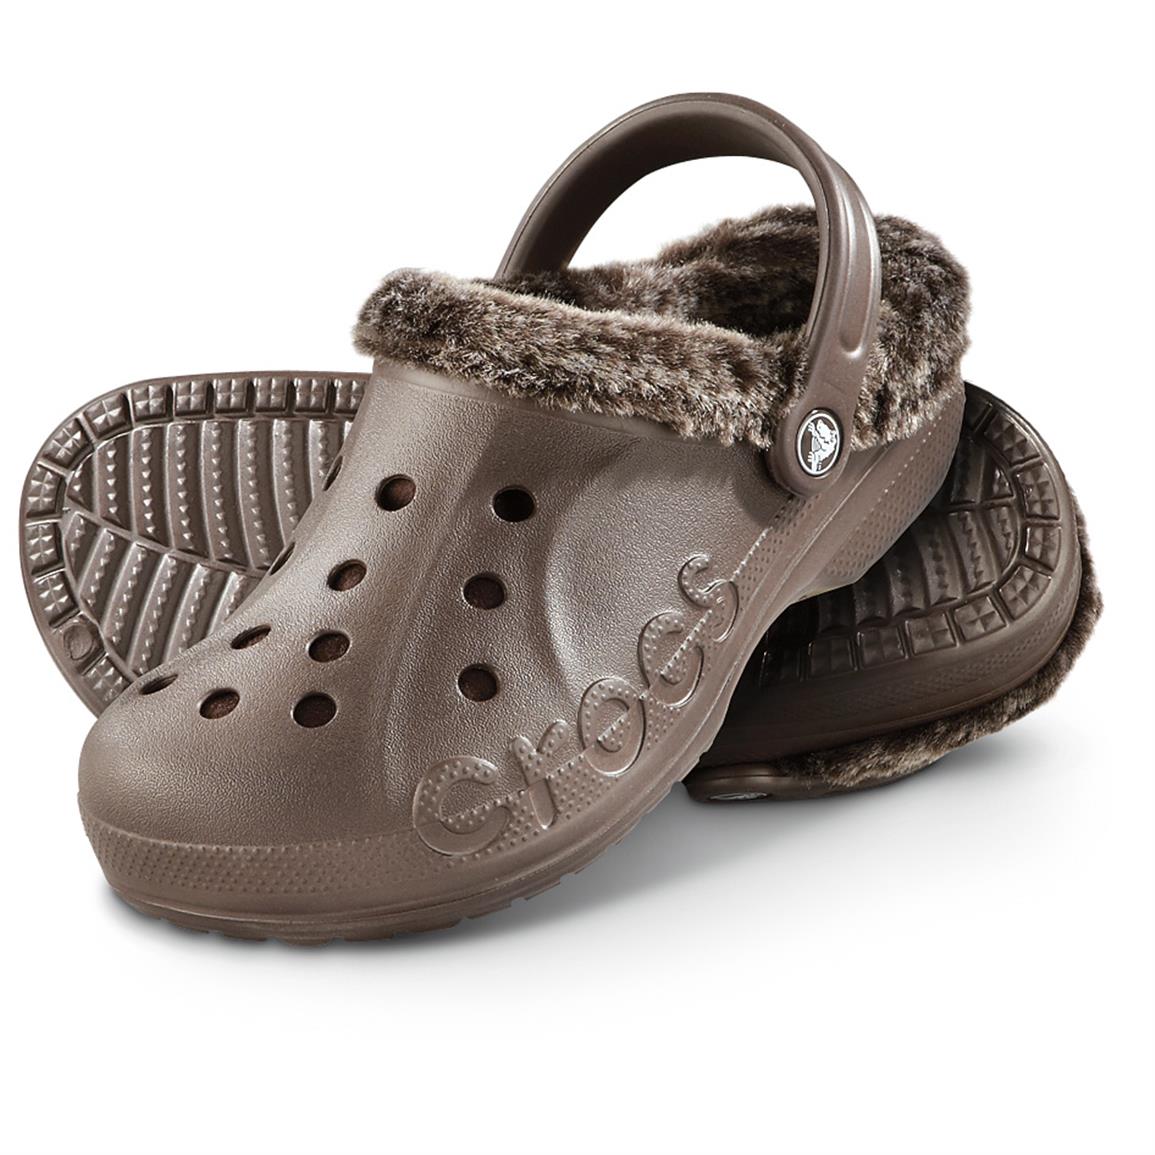 Crocs Baya Heathered Lined Clogs 608580, Casual Shoes at